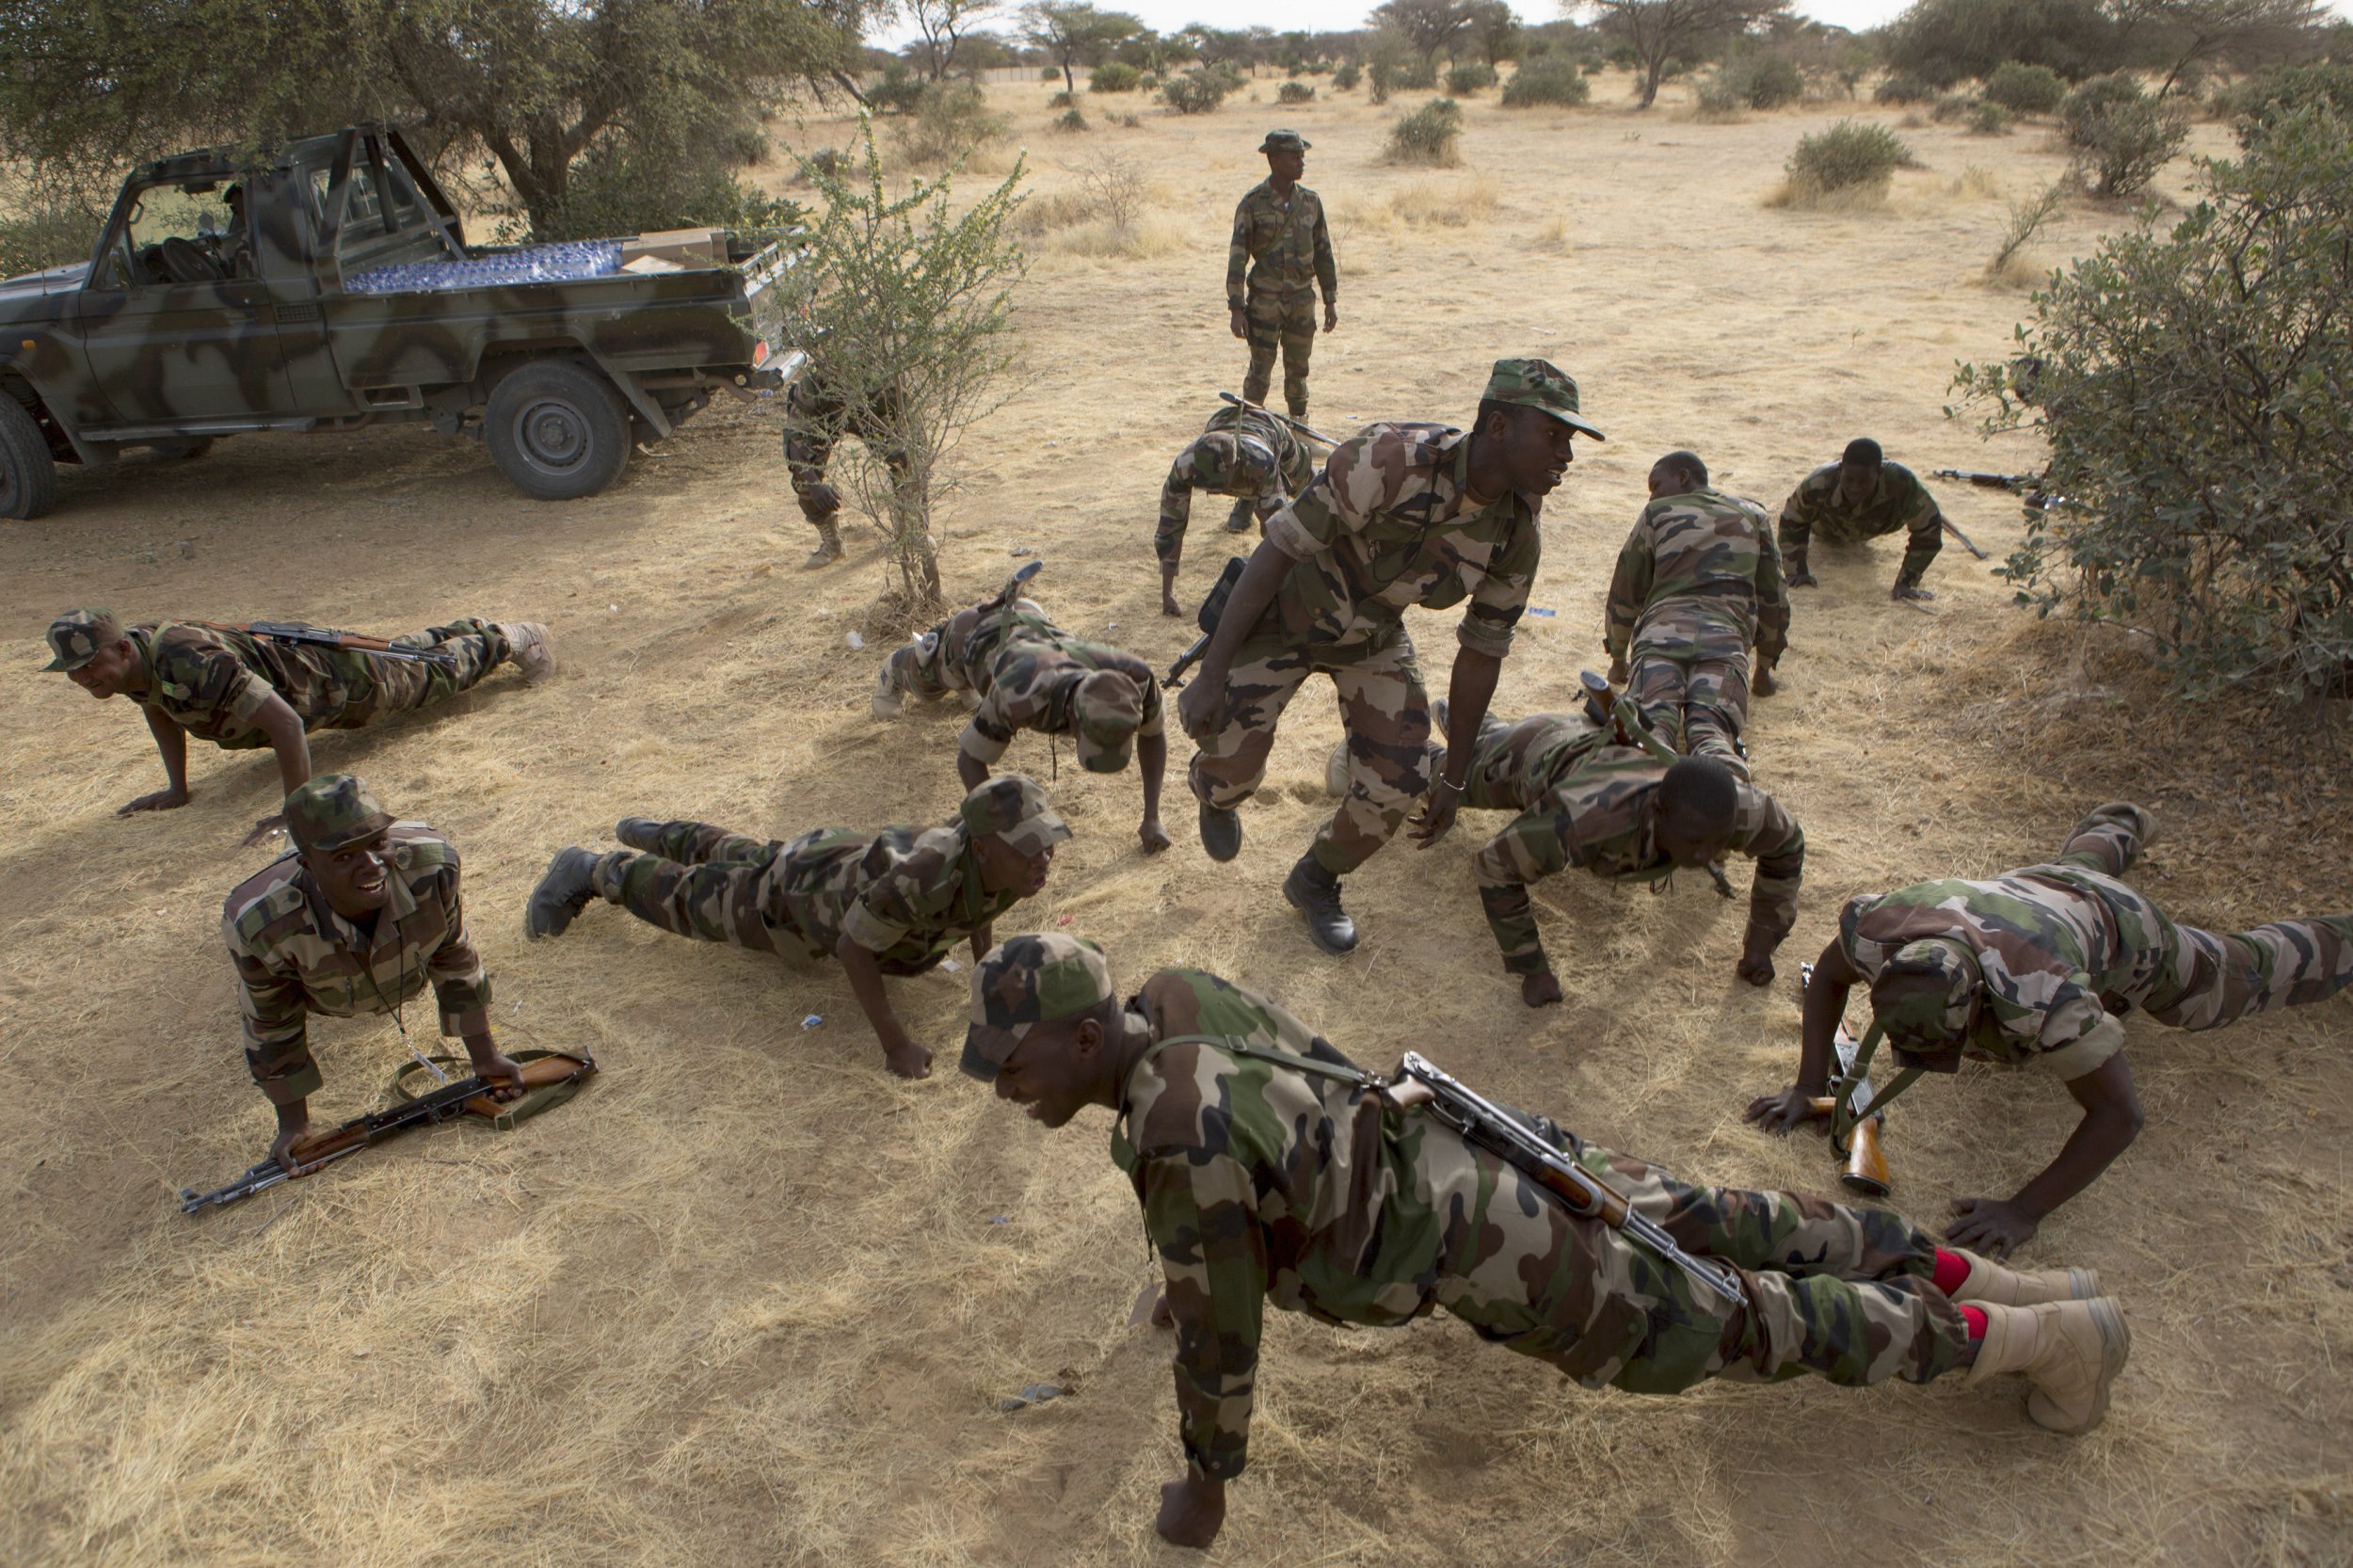 Nigerian soldiers on Flintlock